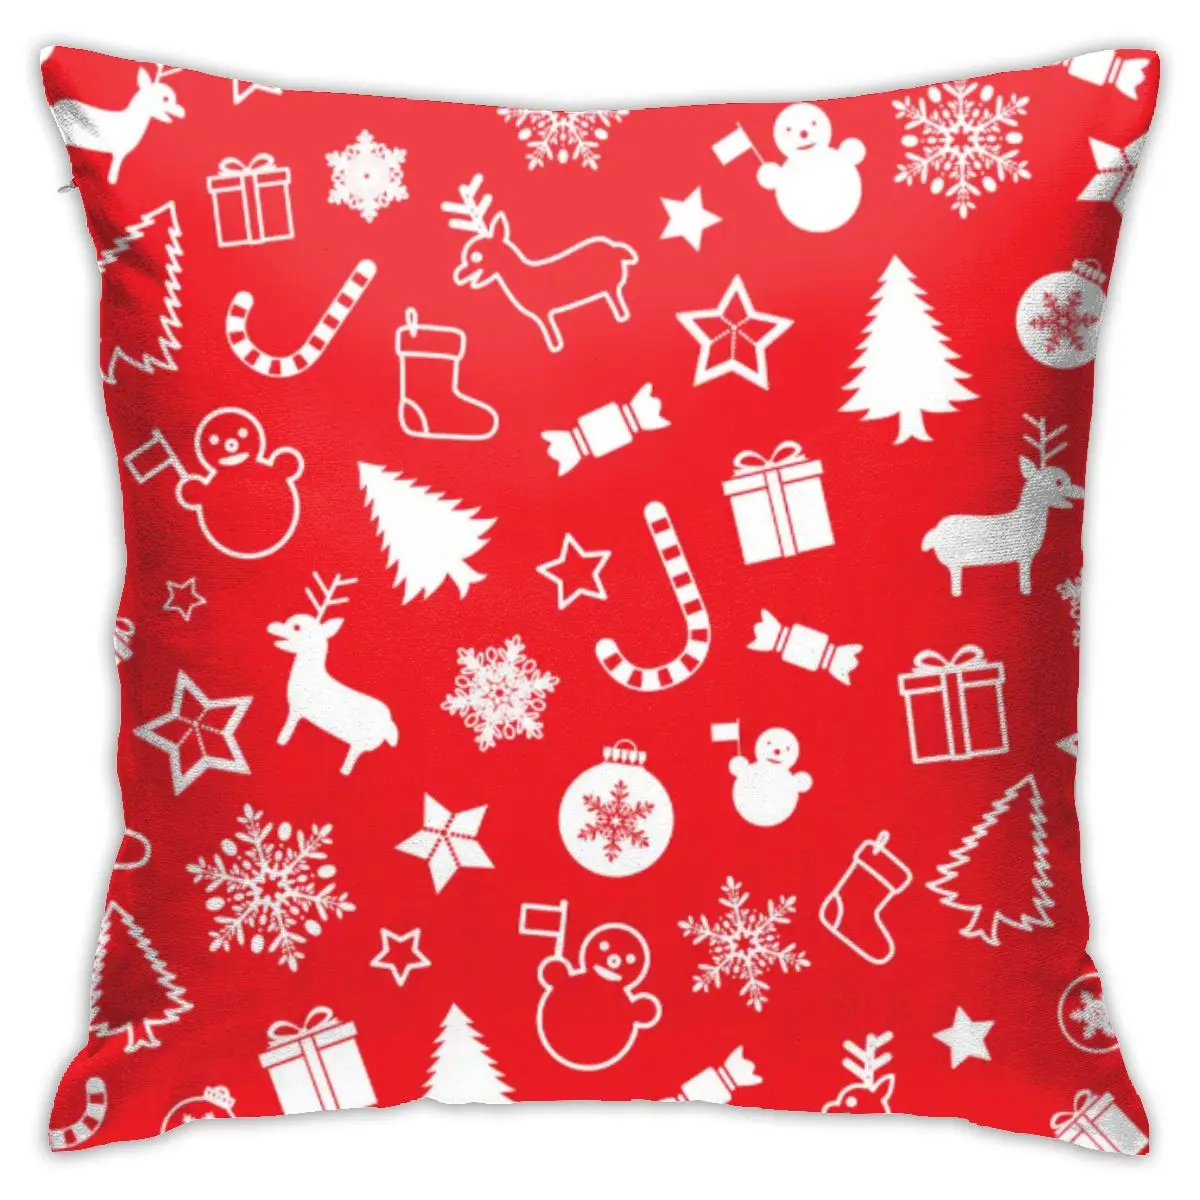 

Snowflake Christmas Decorative Cushion Cover Floral Pillow Case For Car Sofa Decor Pillowcase Home Pillows 45 x 45cm